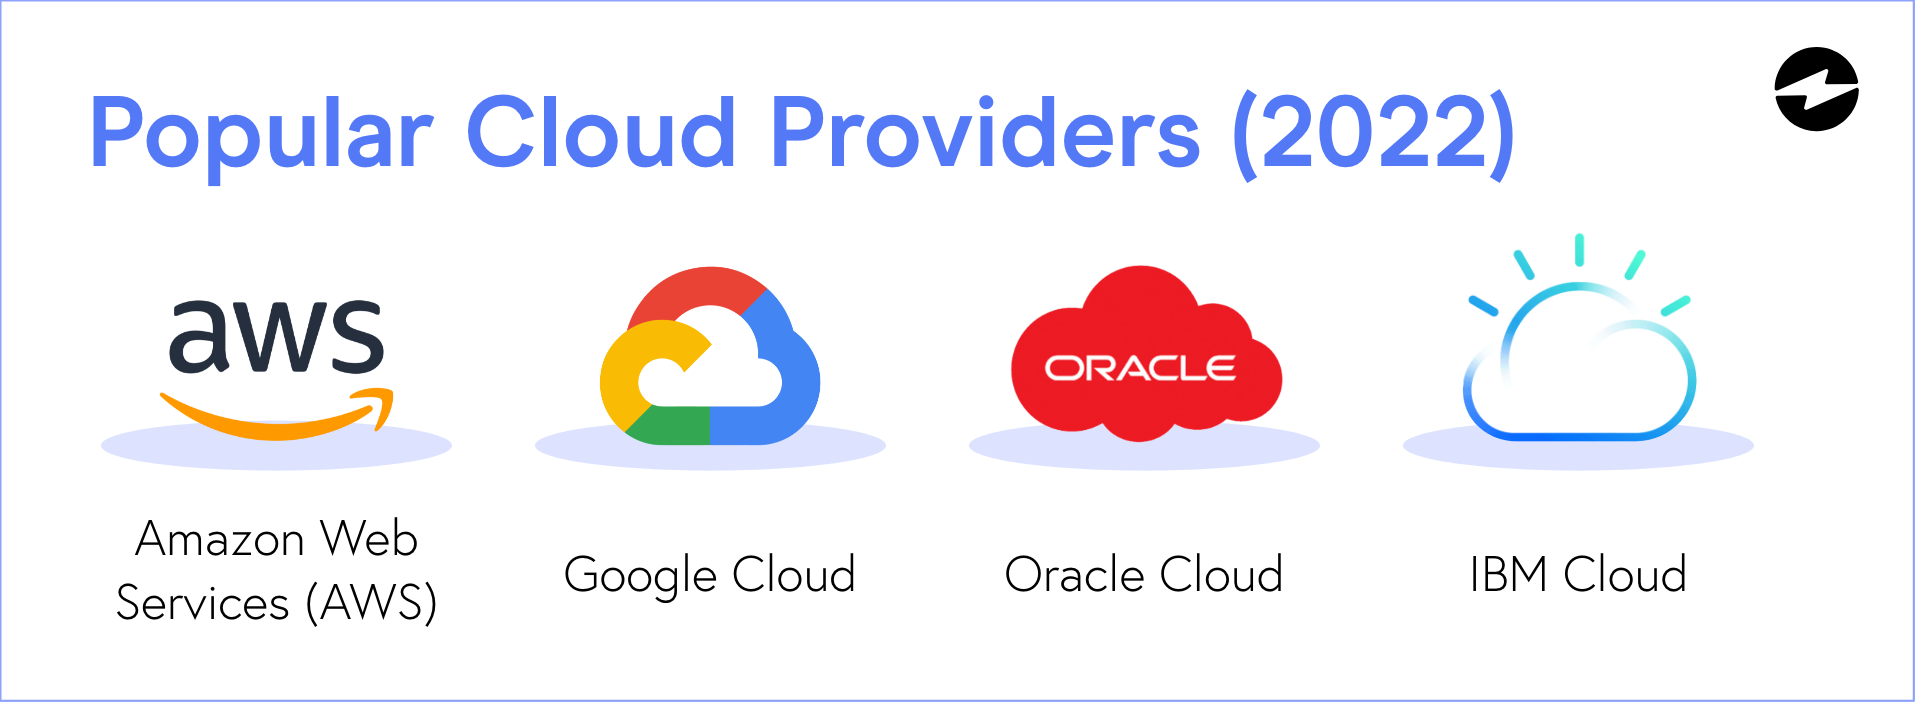 Popular Cloud Providers 2022